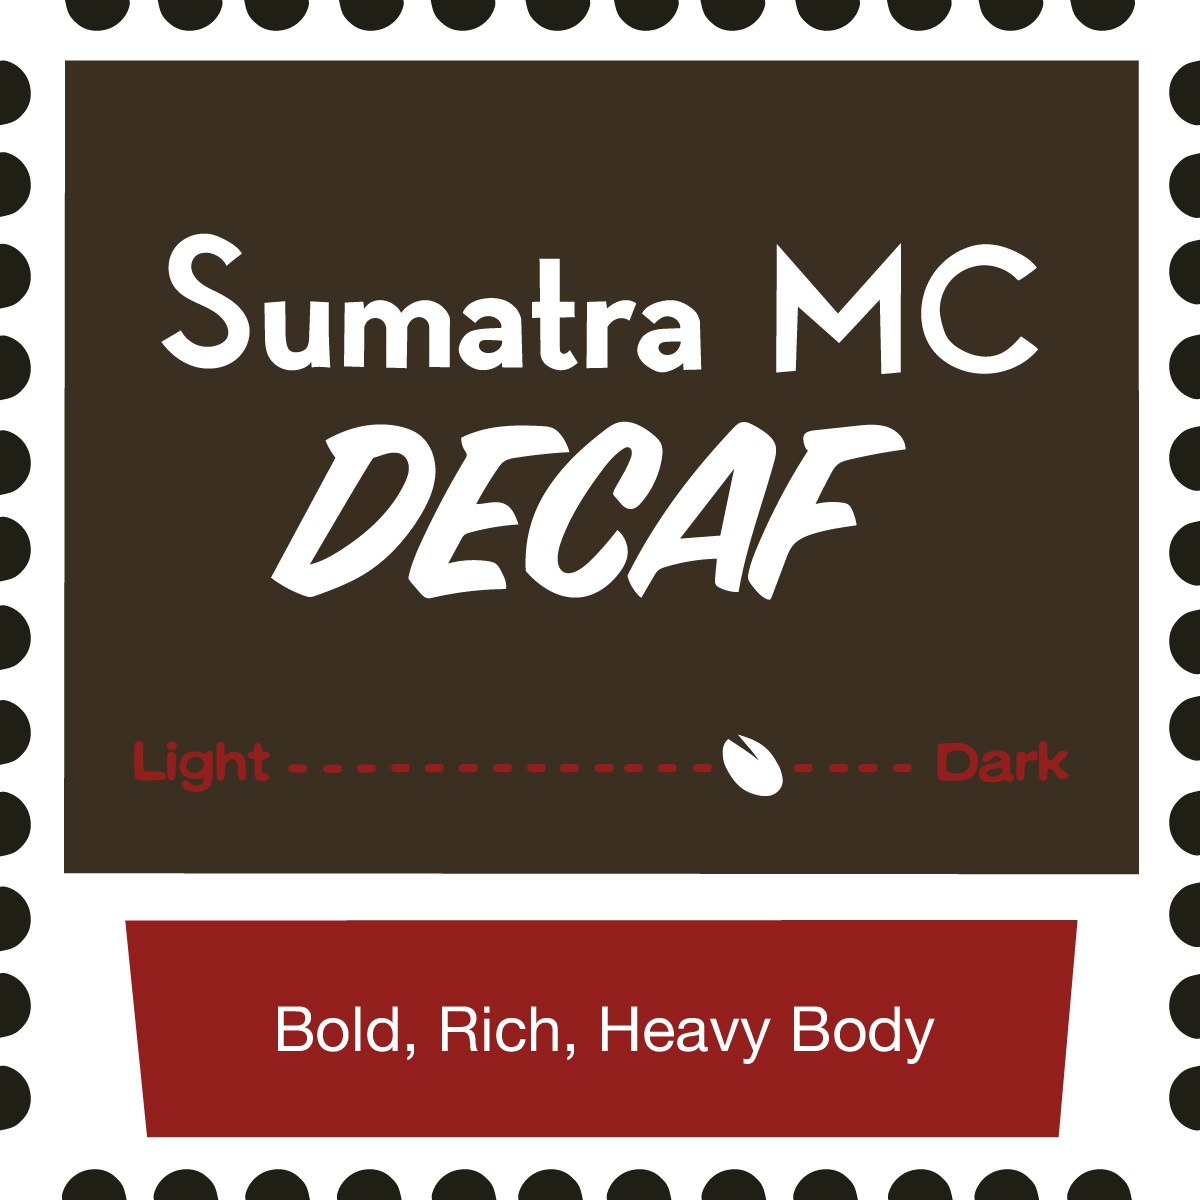 Decaf Sumatra